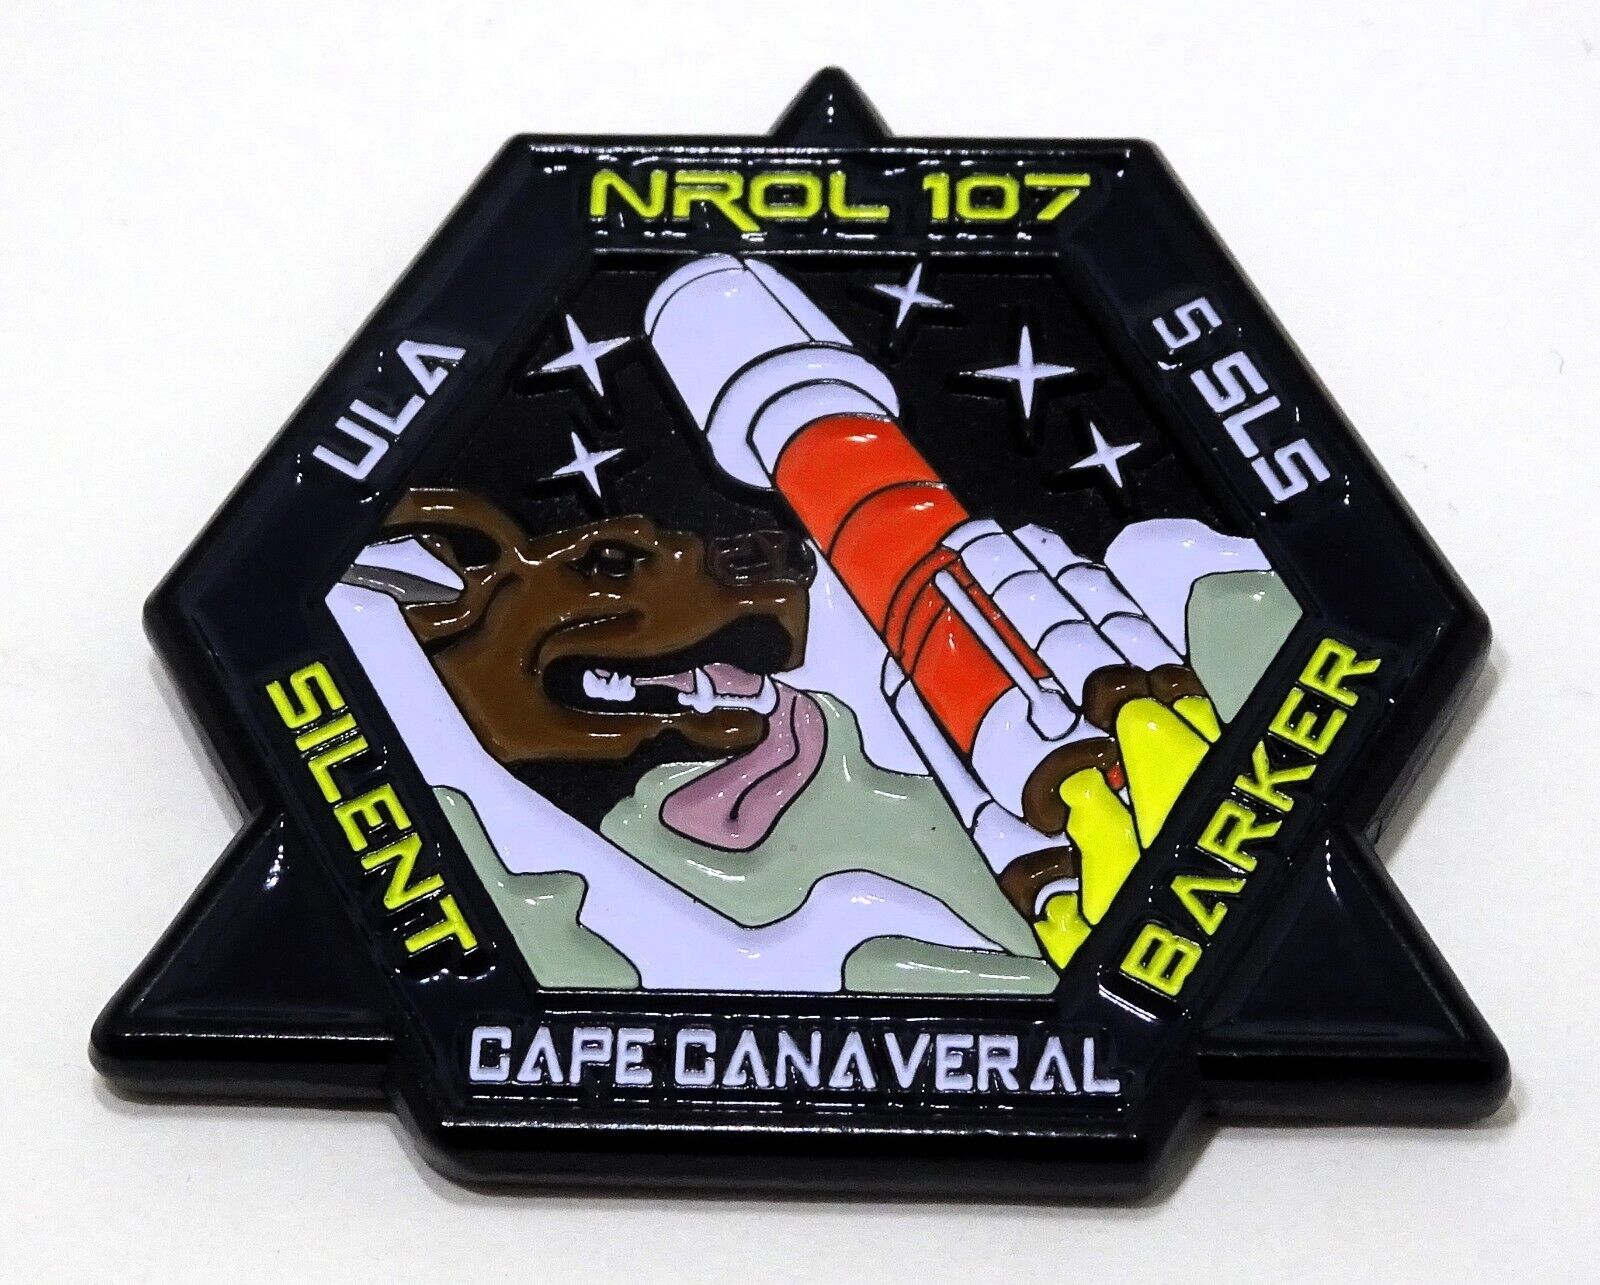 NROL-107 NRO L-107 ATLAS V ULA USSF USAF CCSFS MISSION LAUNCH SATELLITE COIN